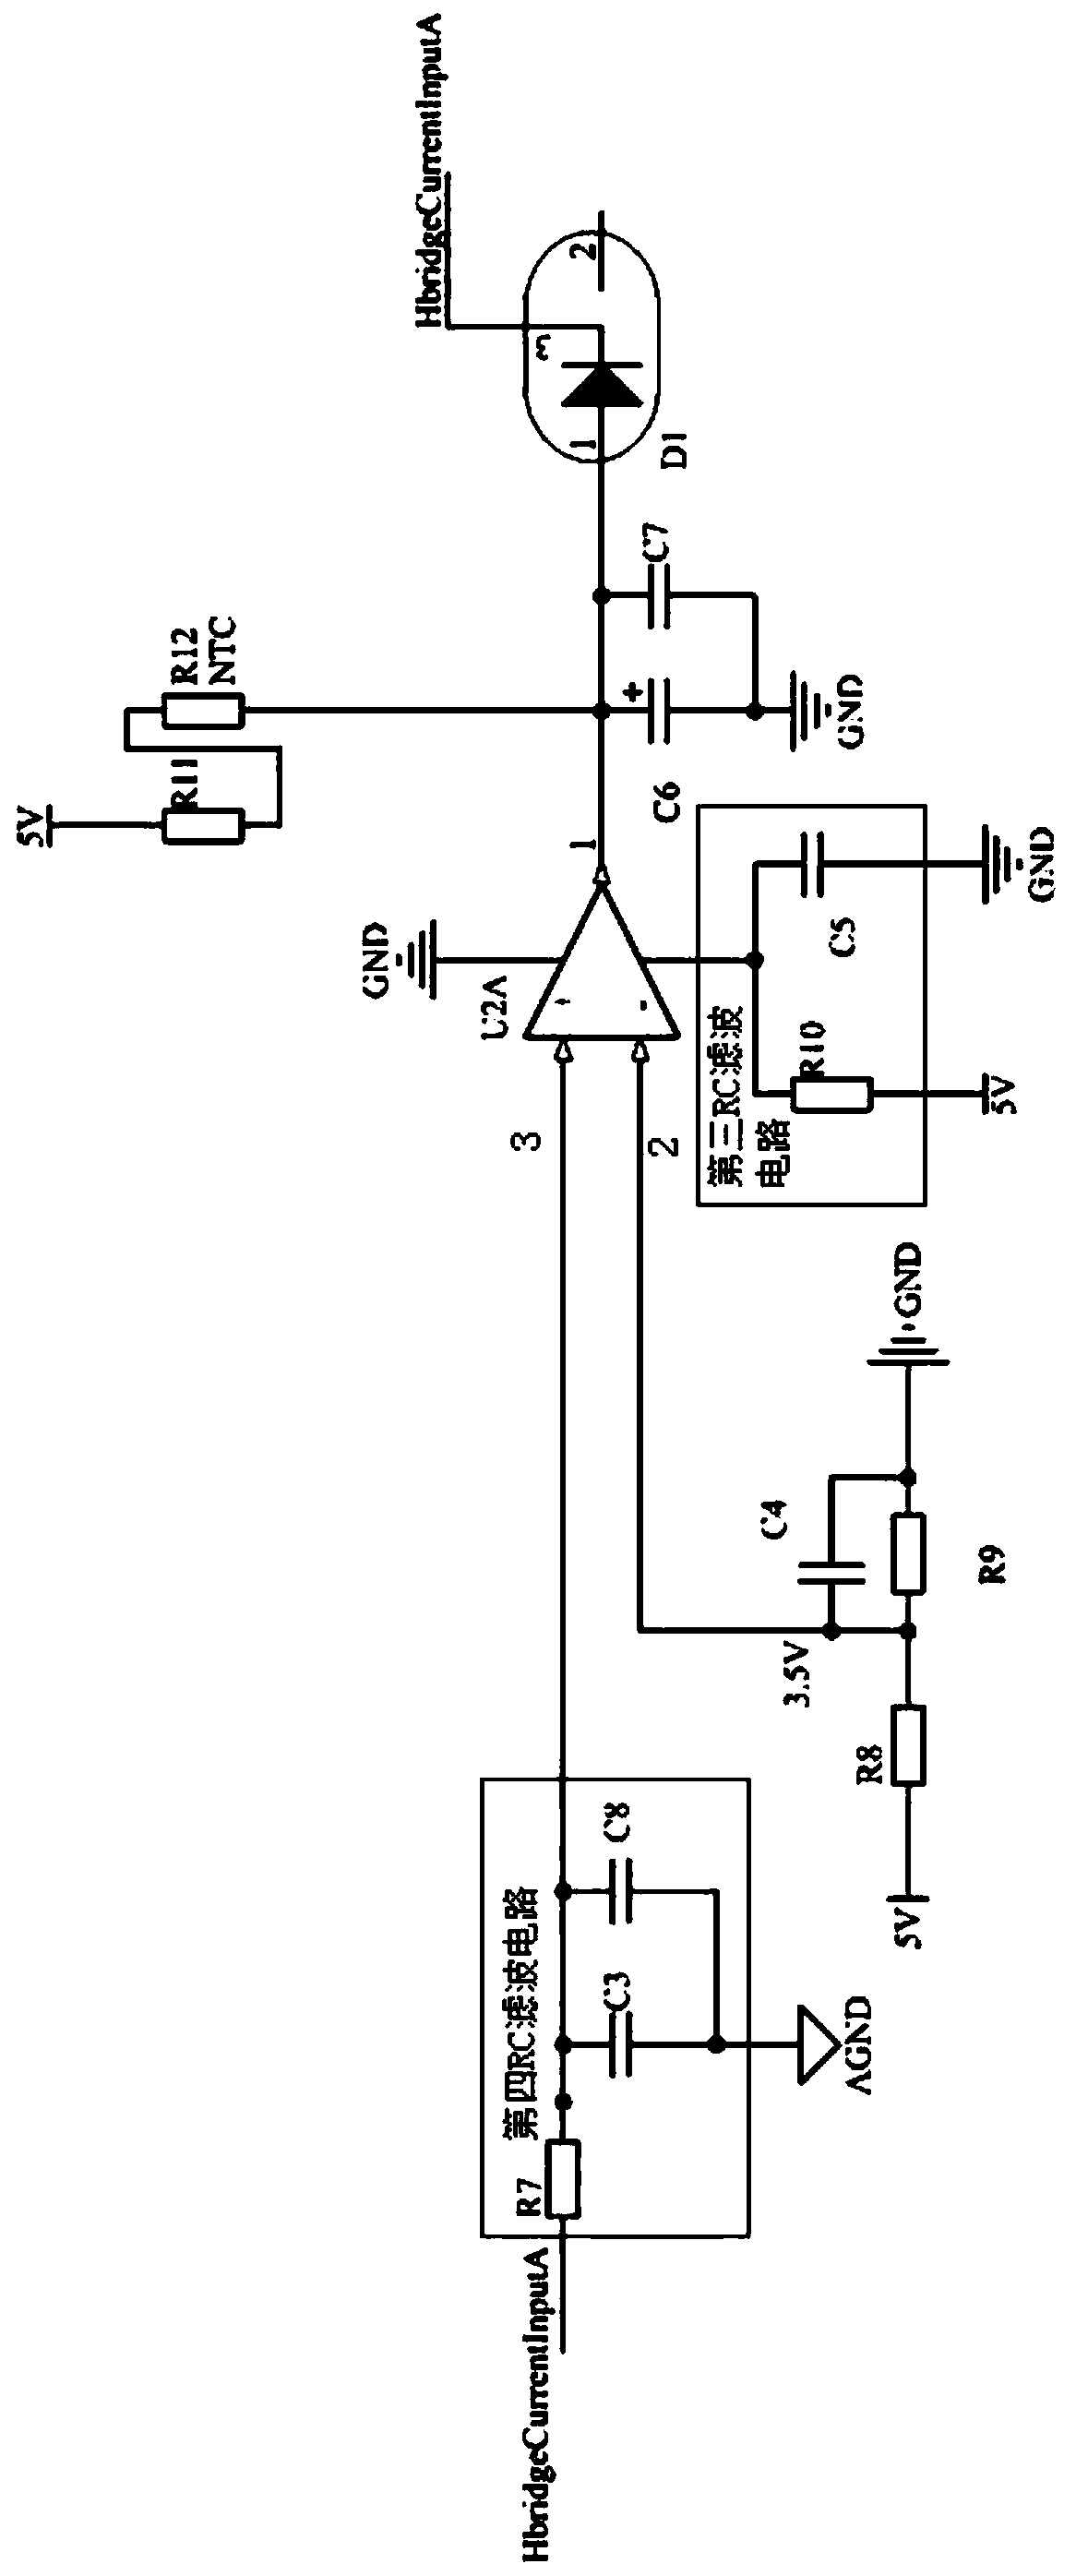 DC brushless motor starting protection method and circuit